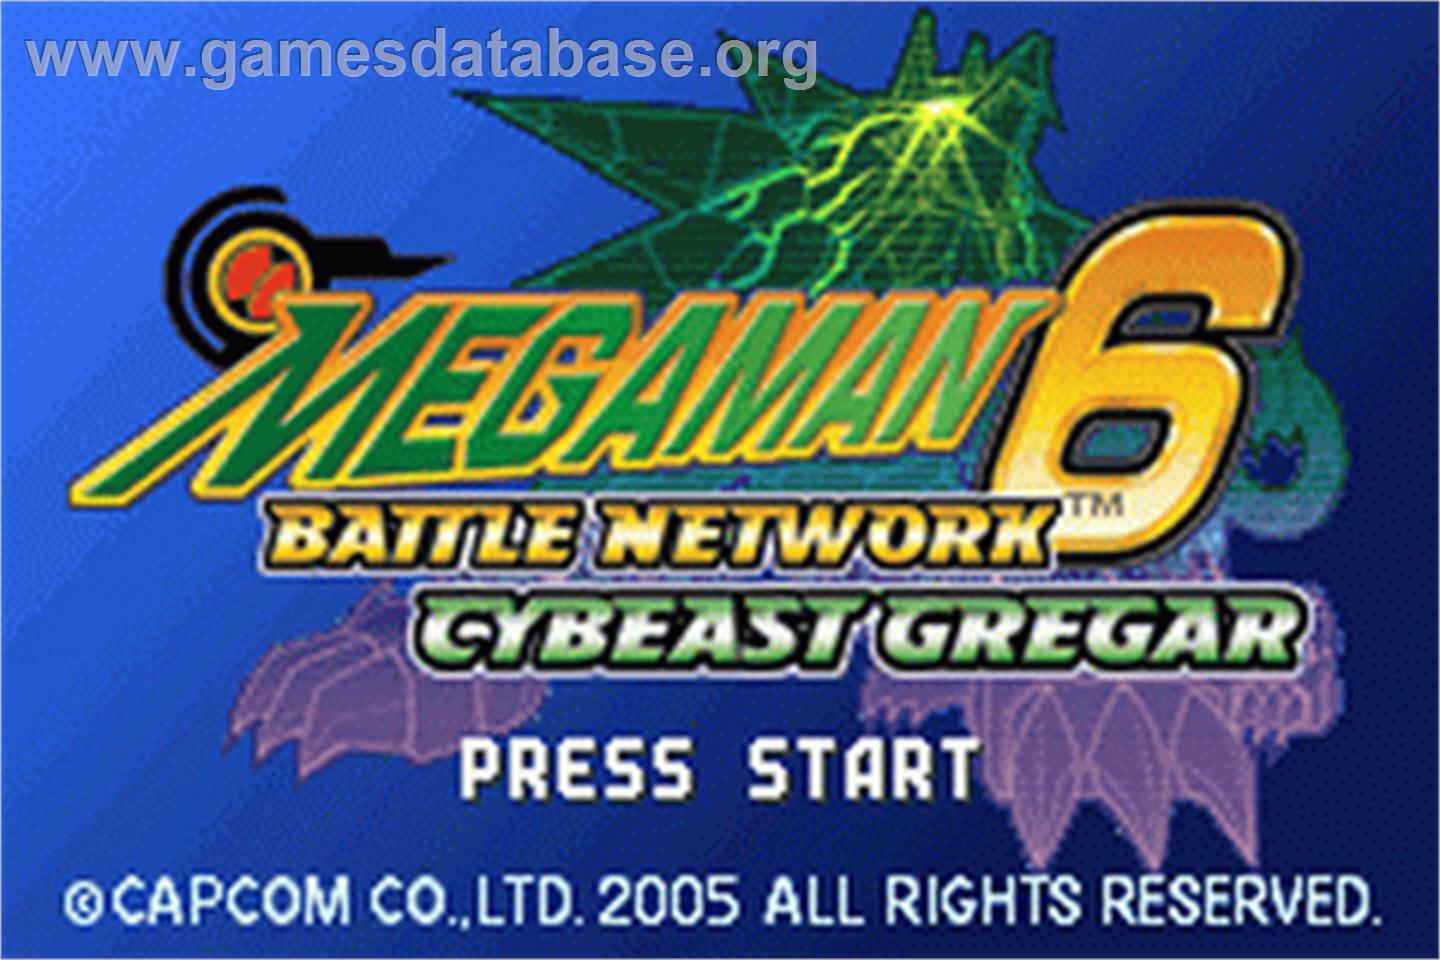 Mega Man Battle Network 6: Cybeast Gregar - Nintendo Game Boy Advance - Artwork - Title Screen